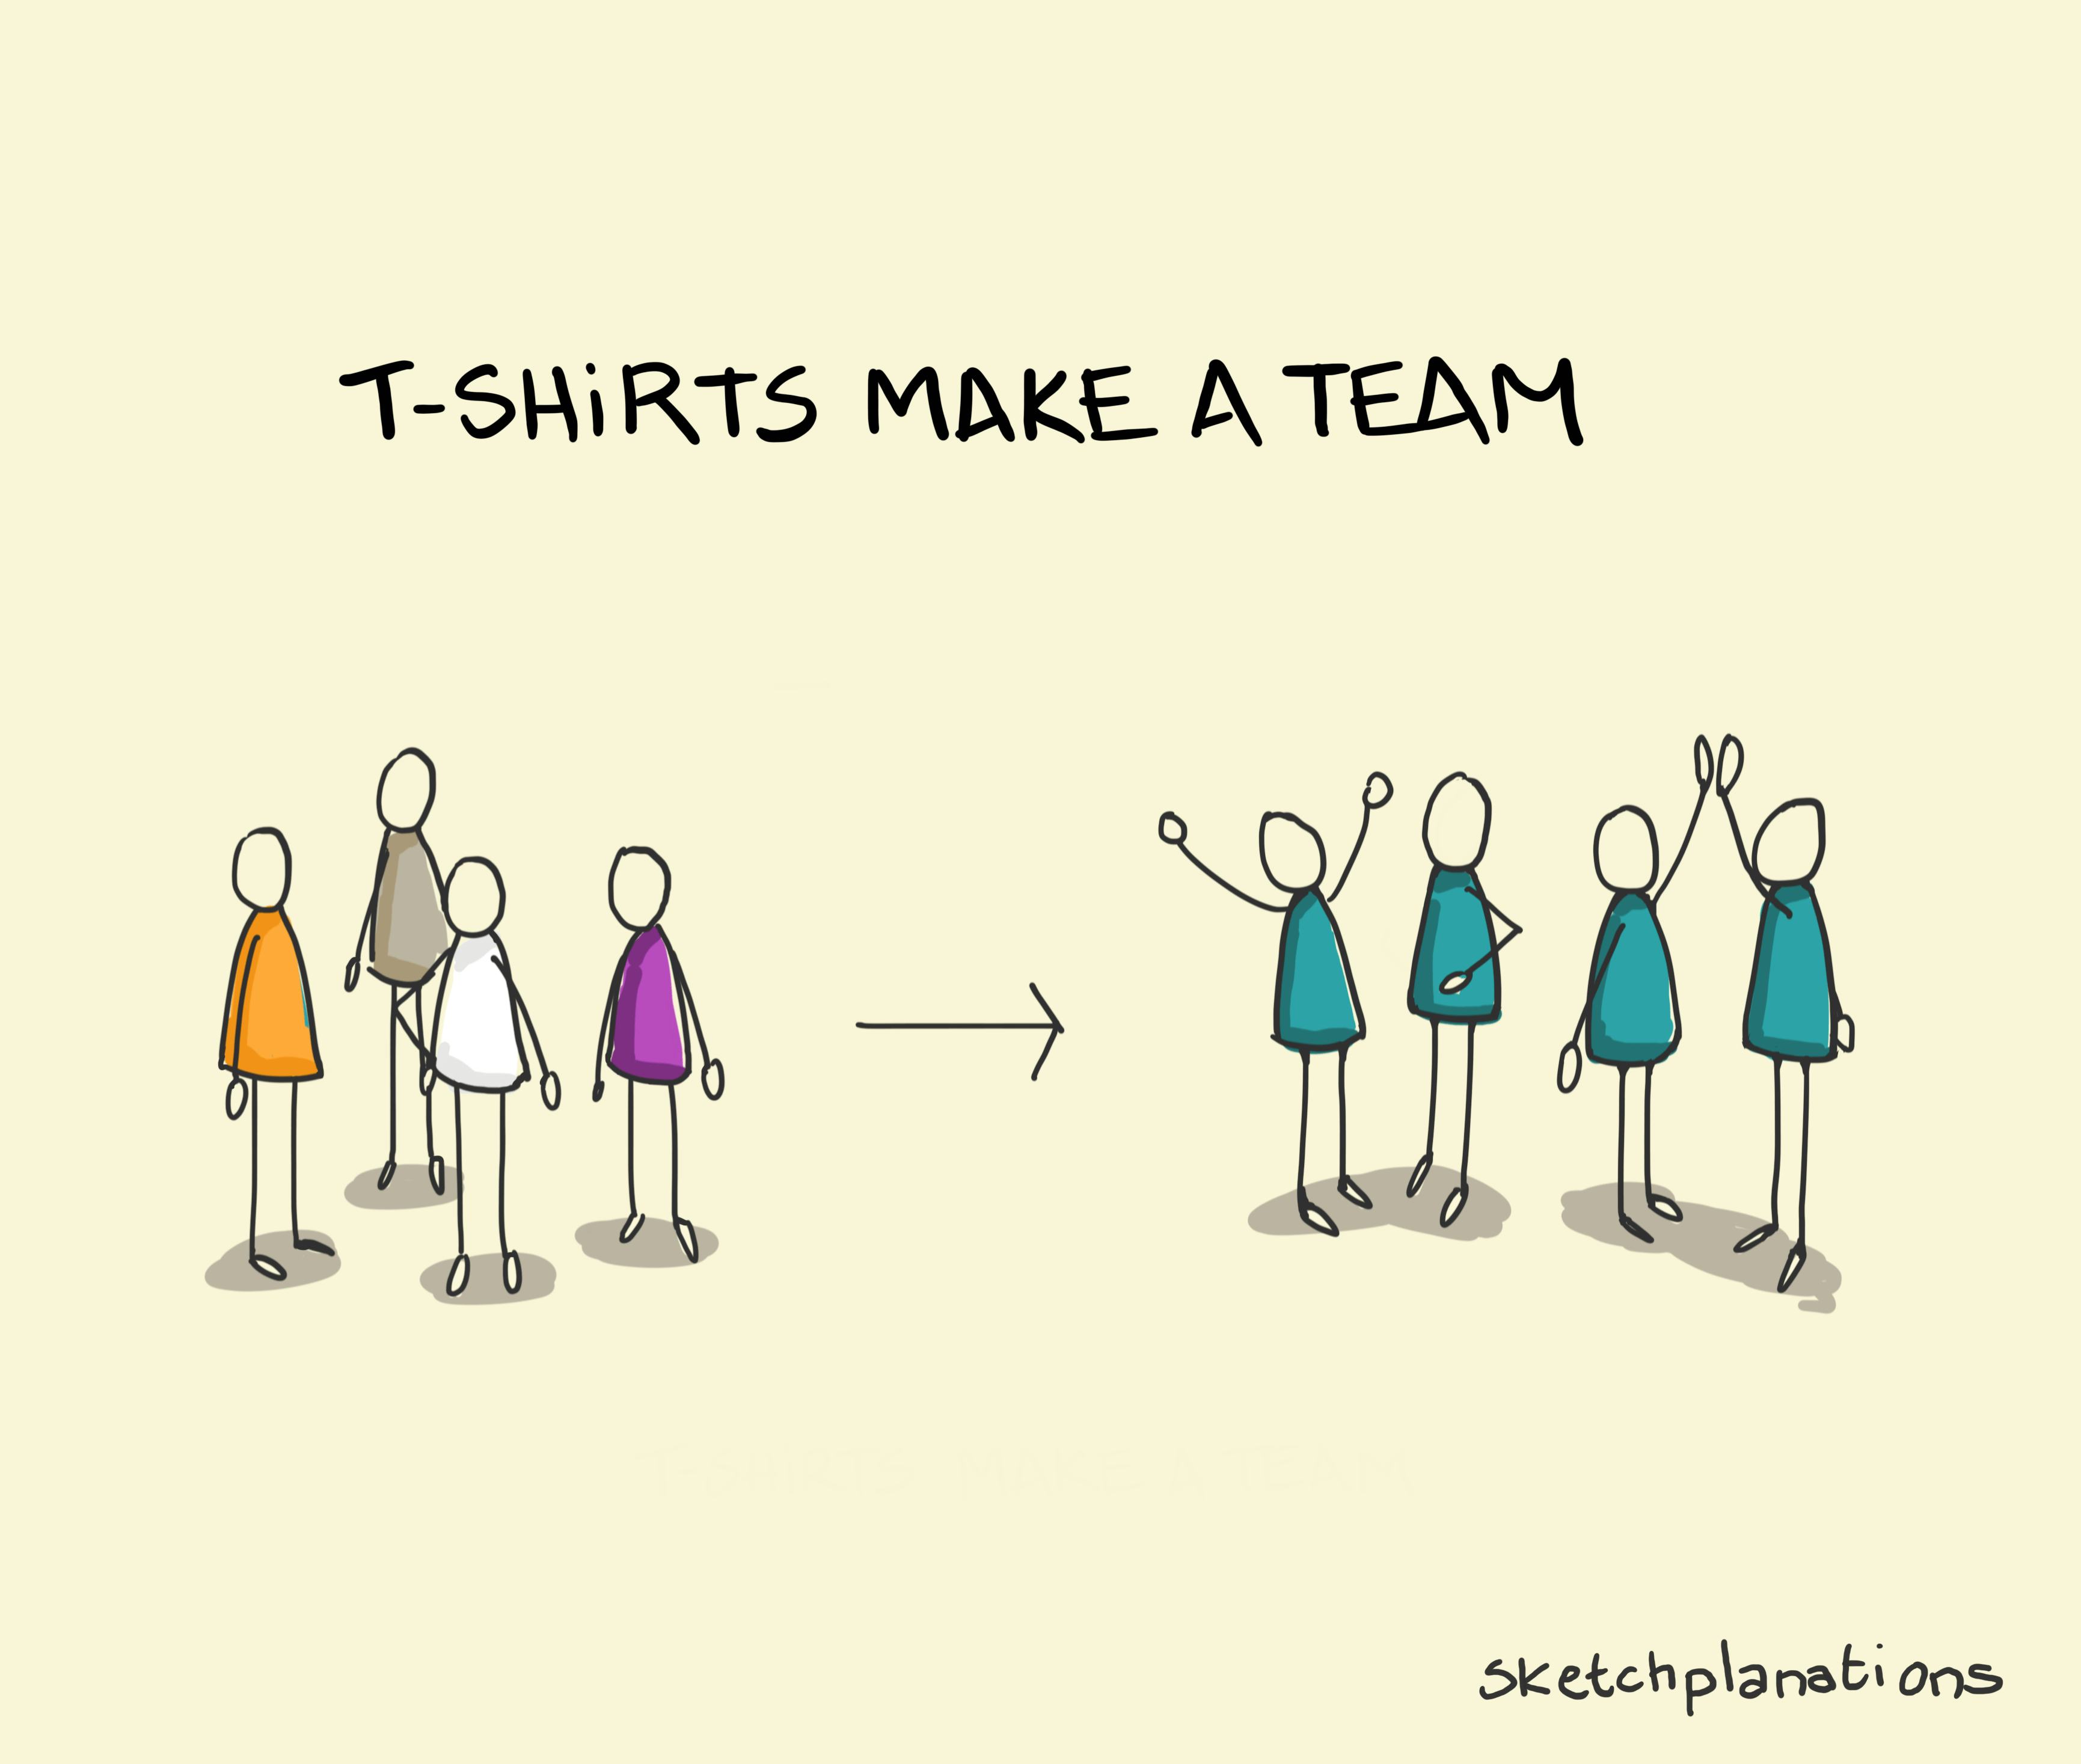 T-shirts make a team - Sketchplanations